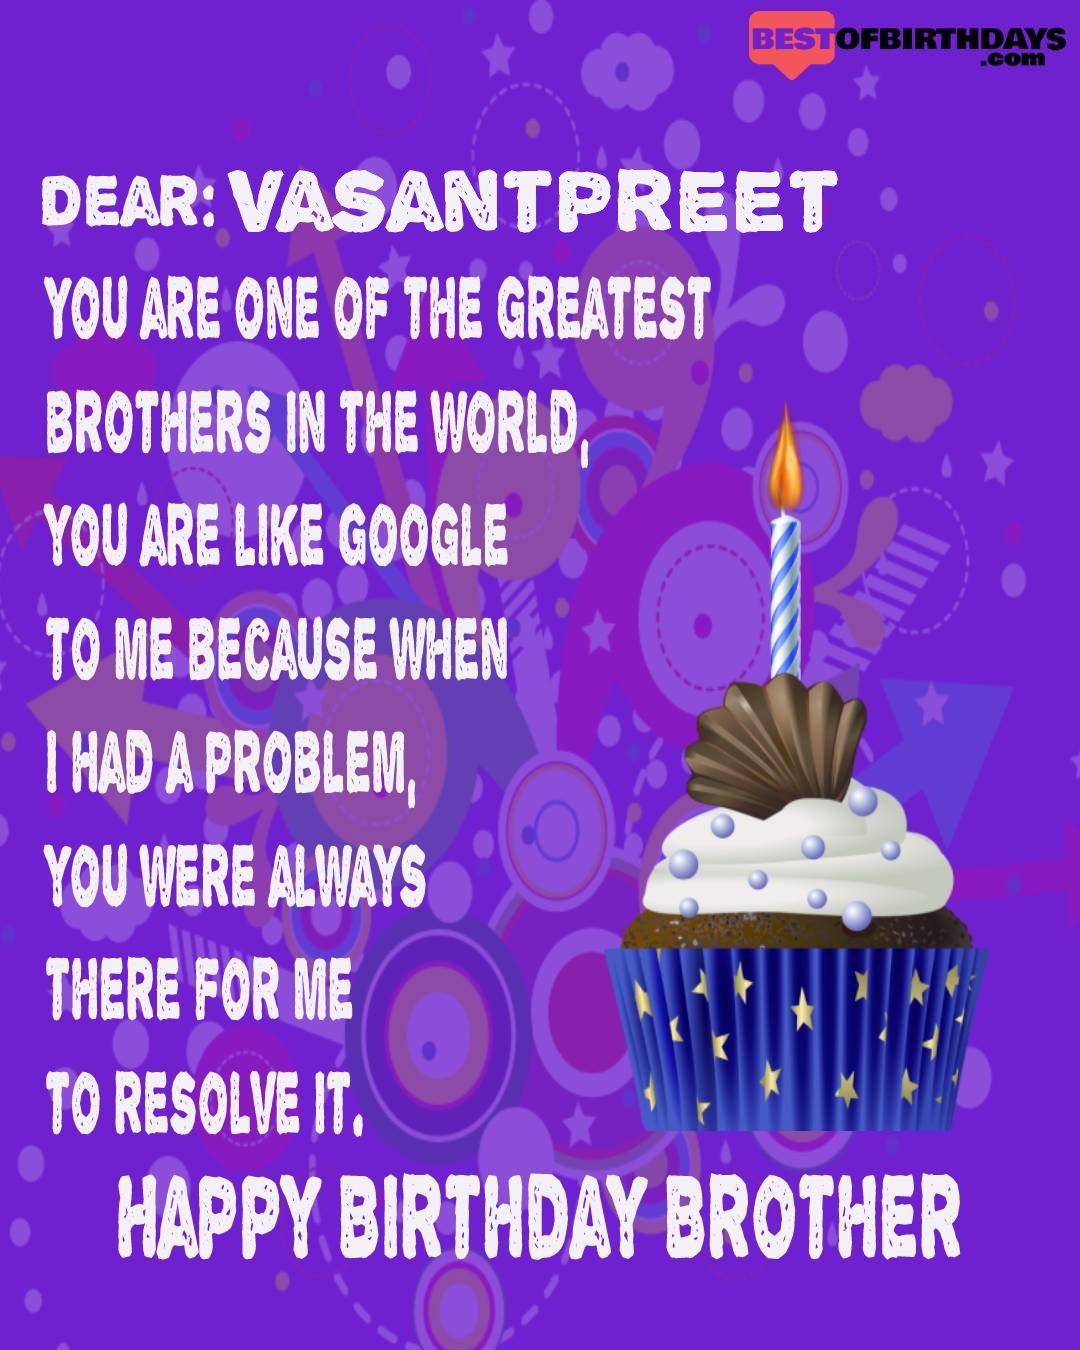 Happy birthday vasantpreet bhai brother bro